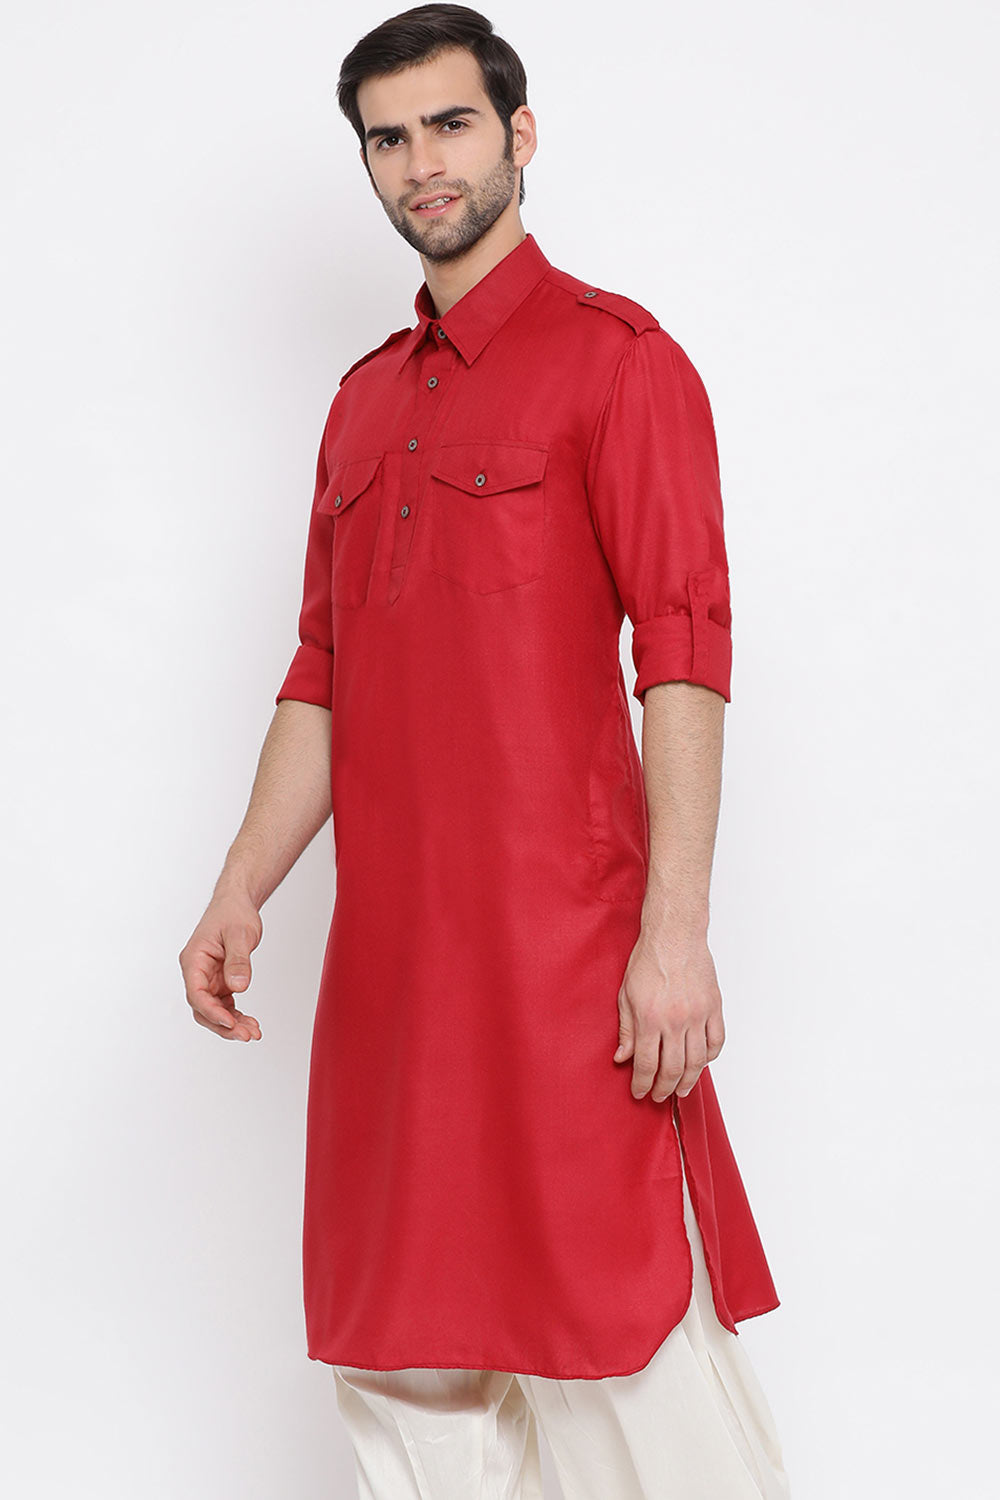 Red Blended Cotton Pathani Kurta for Men's